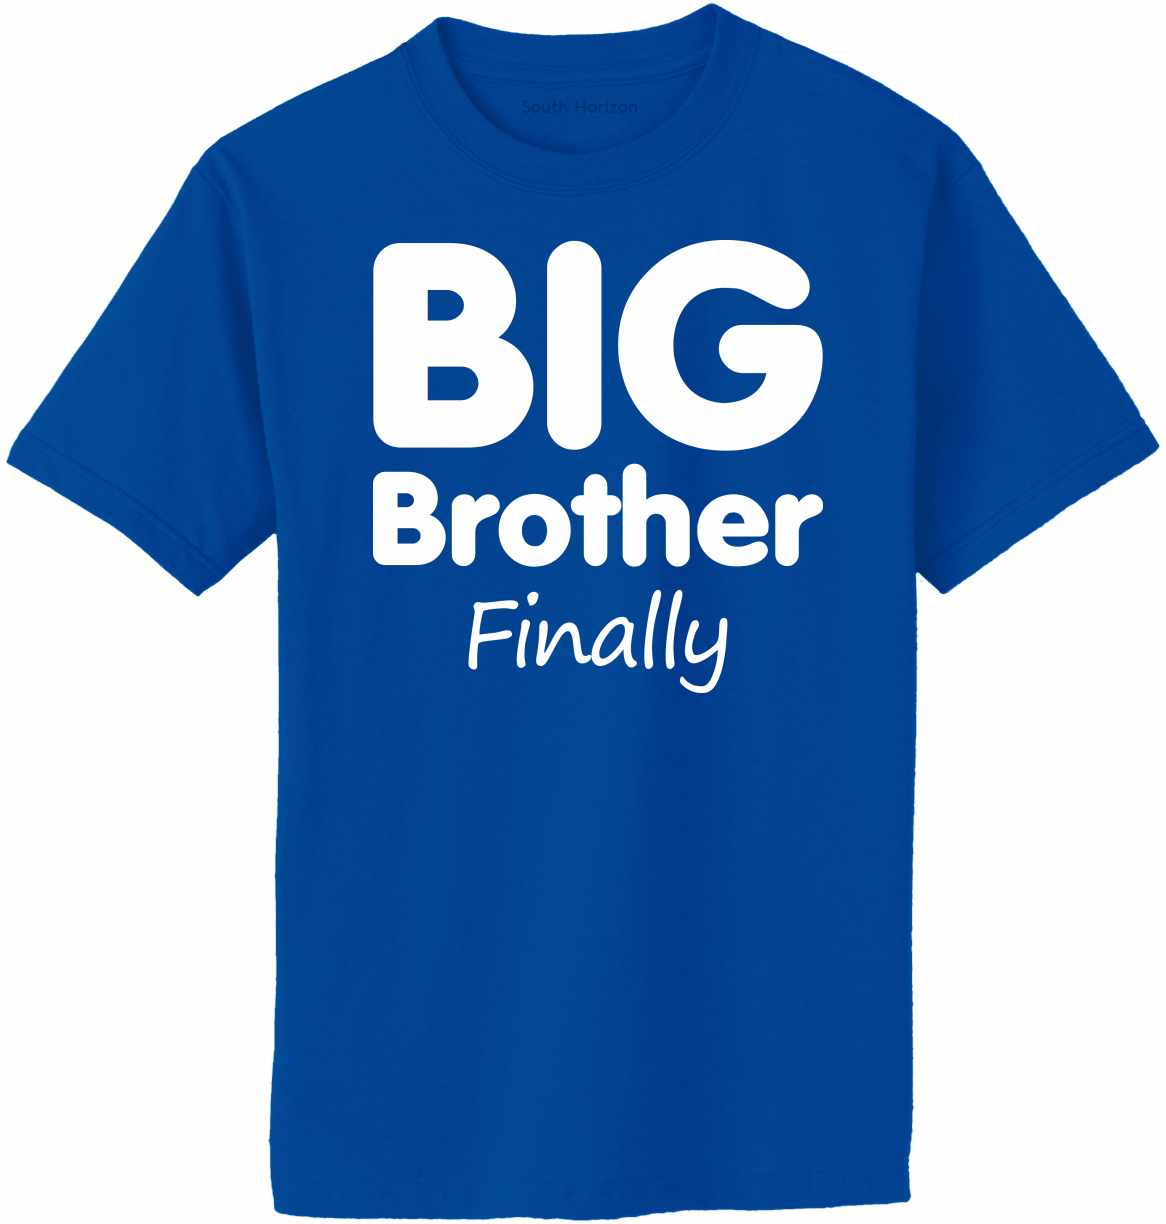 Big Brother Finally Adult T-Shirt